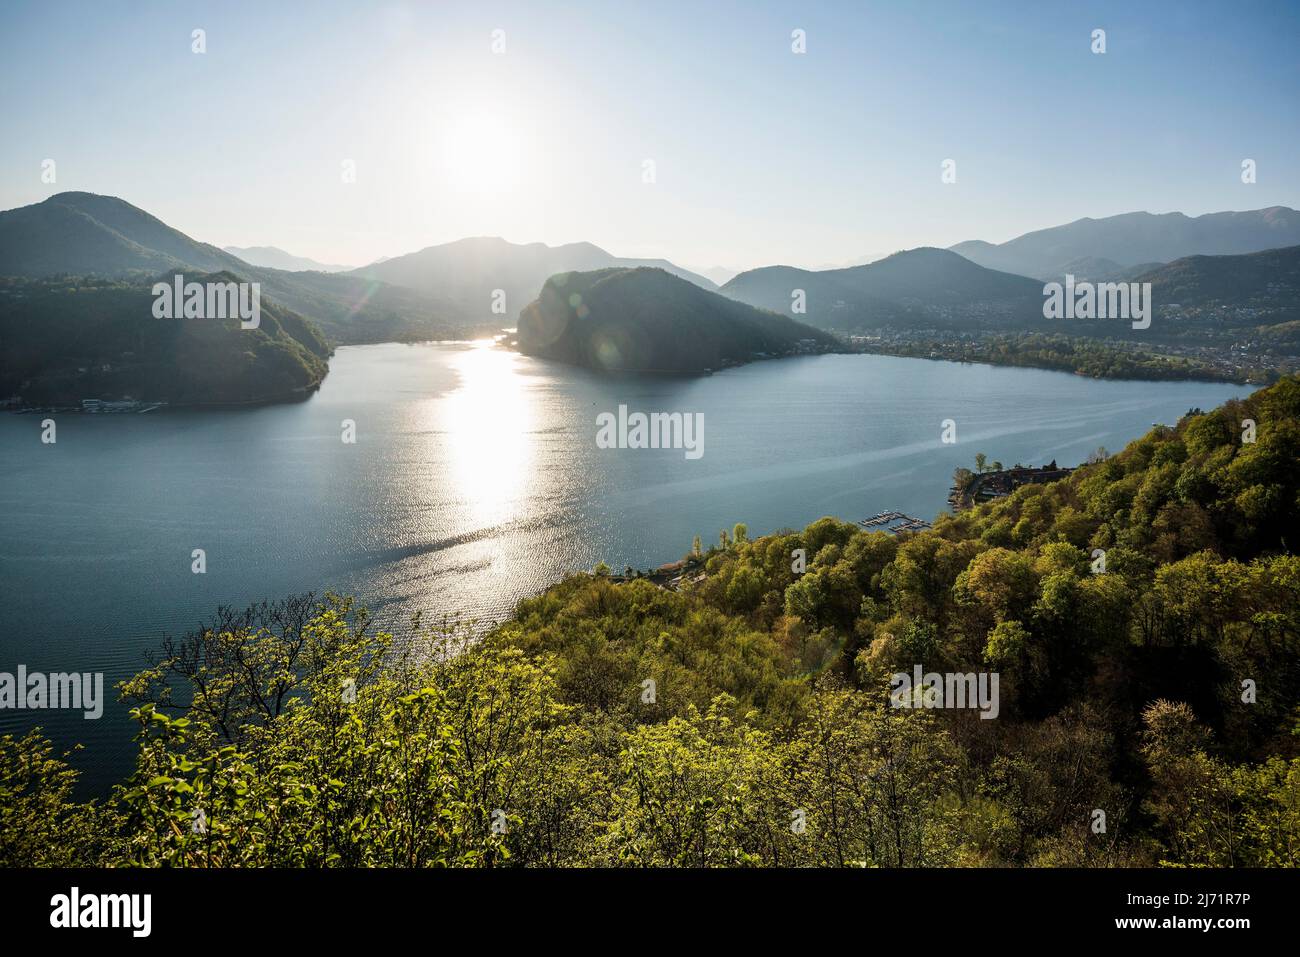 Viewpoint with view of lake and mountains, Sasso Delle Parole, near Lugano, Lake Lugano, Lago di Lugano, Ticino, Switzerland Stock Photo